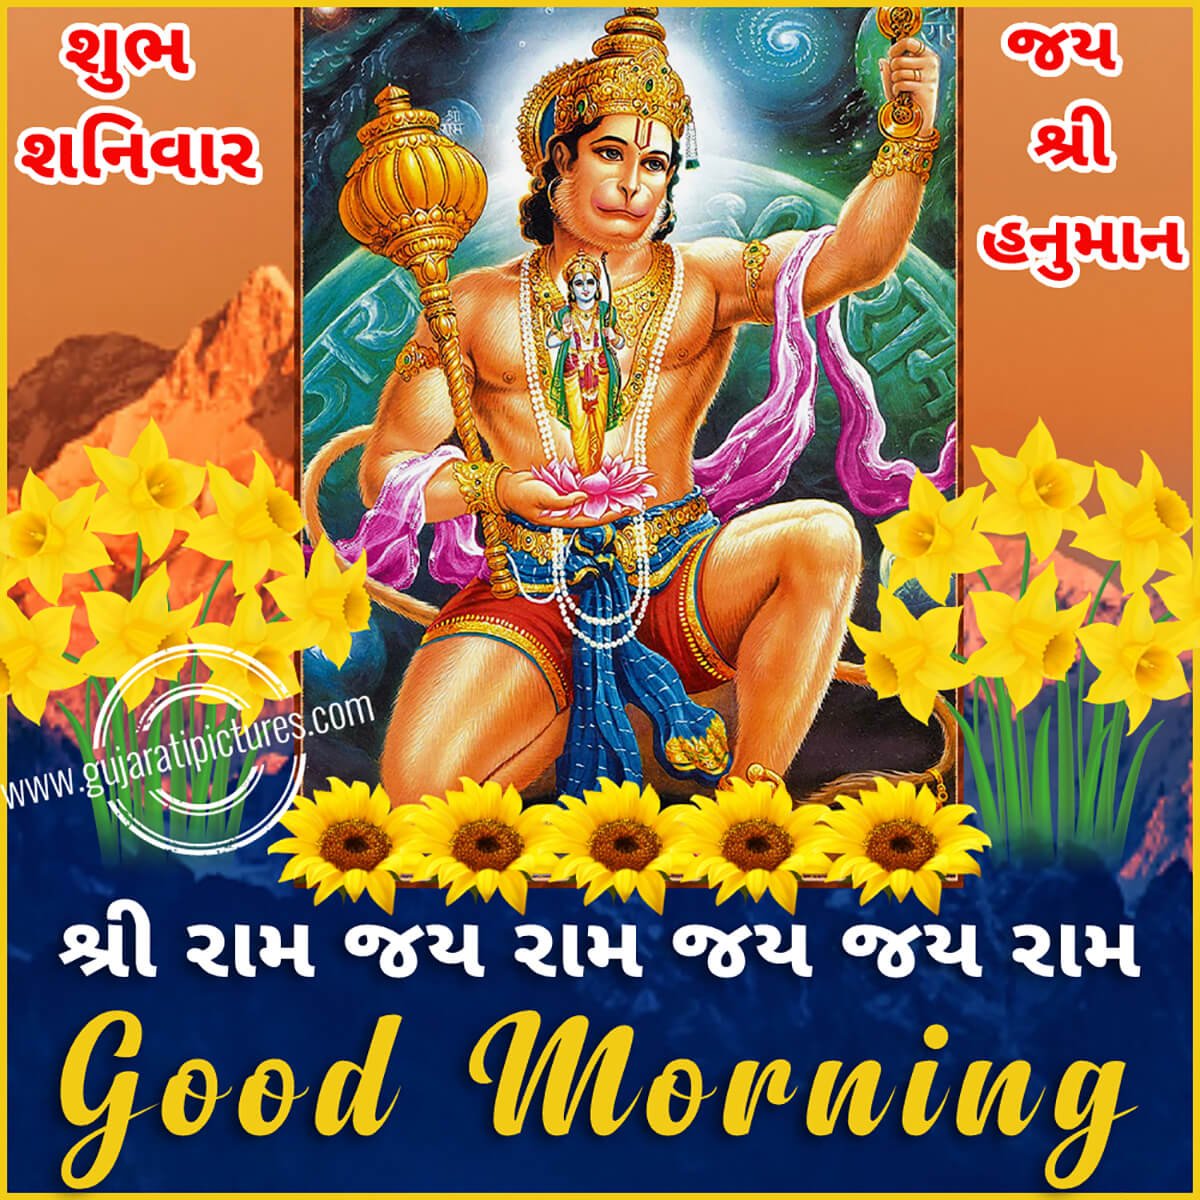 Shubh Shanivar શ ભ શન વ ર Gujarati Pictures Website Dedicated To Gujarati Community